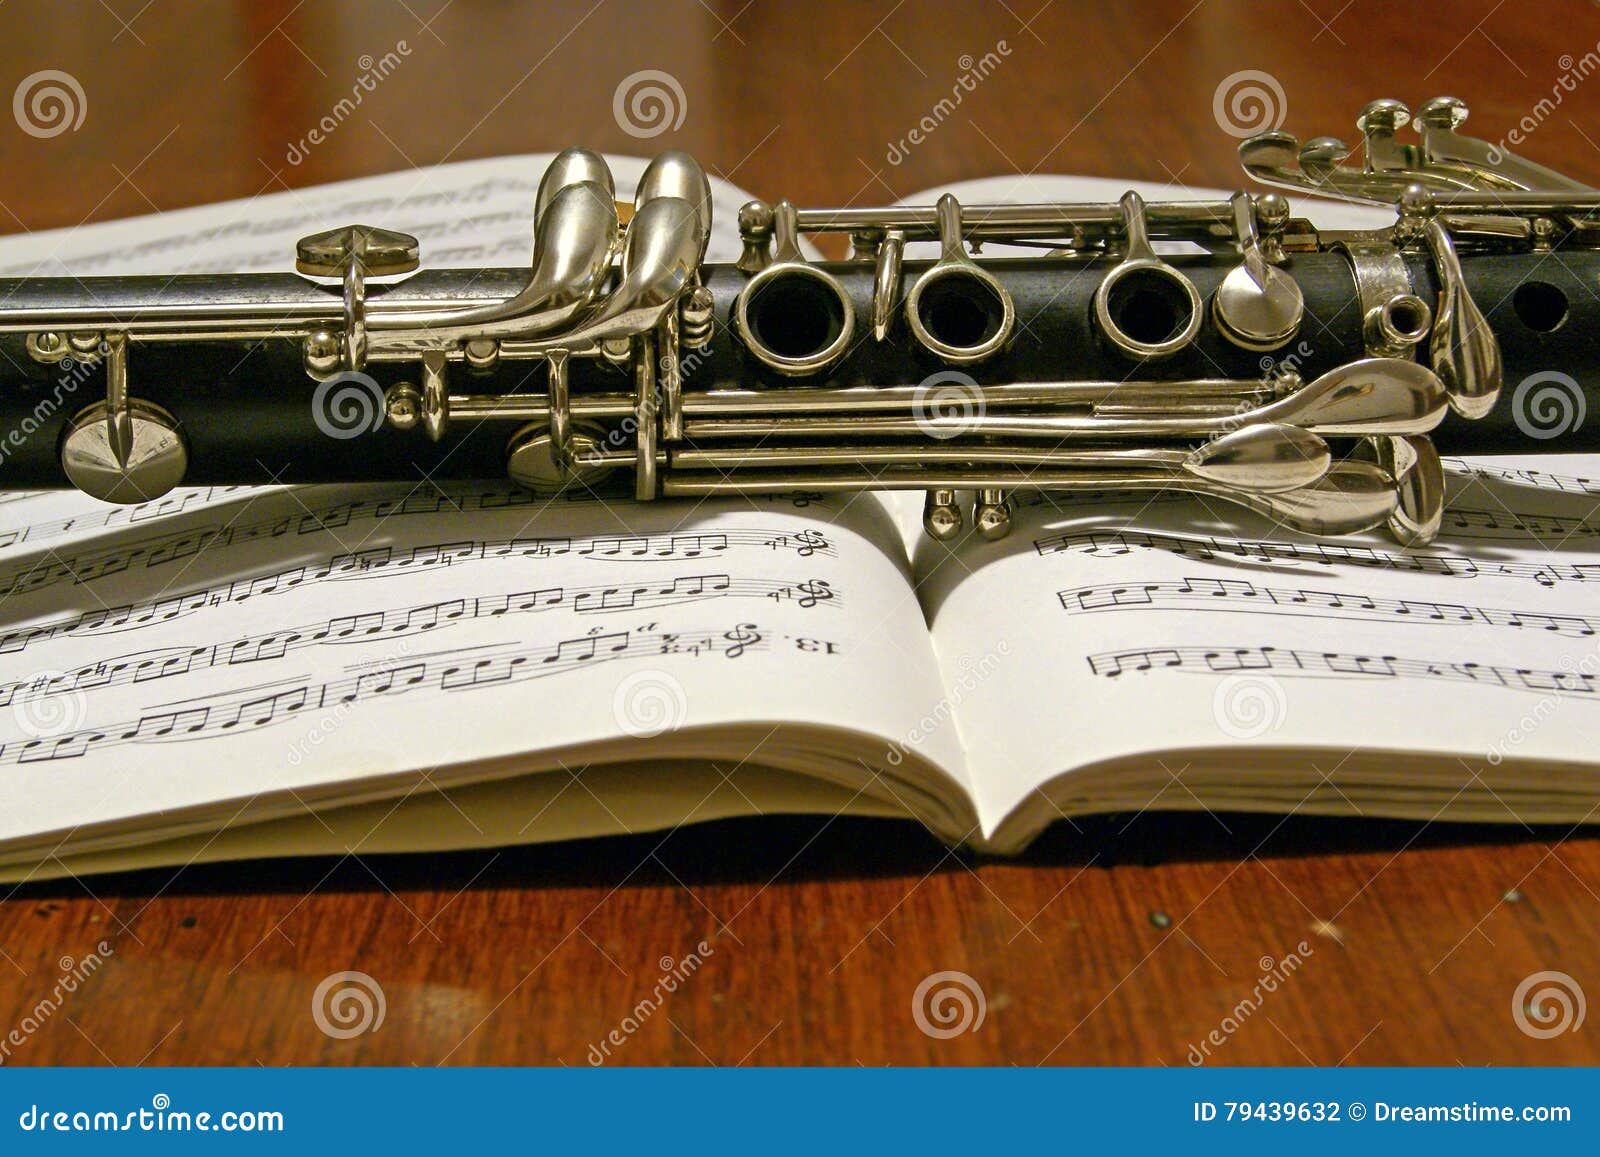 the clarinet